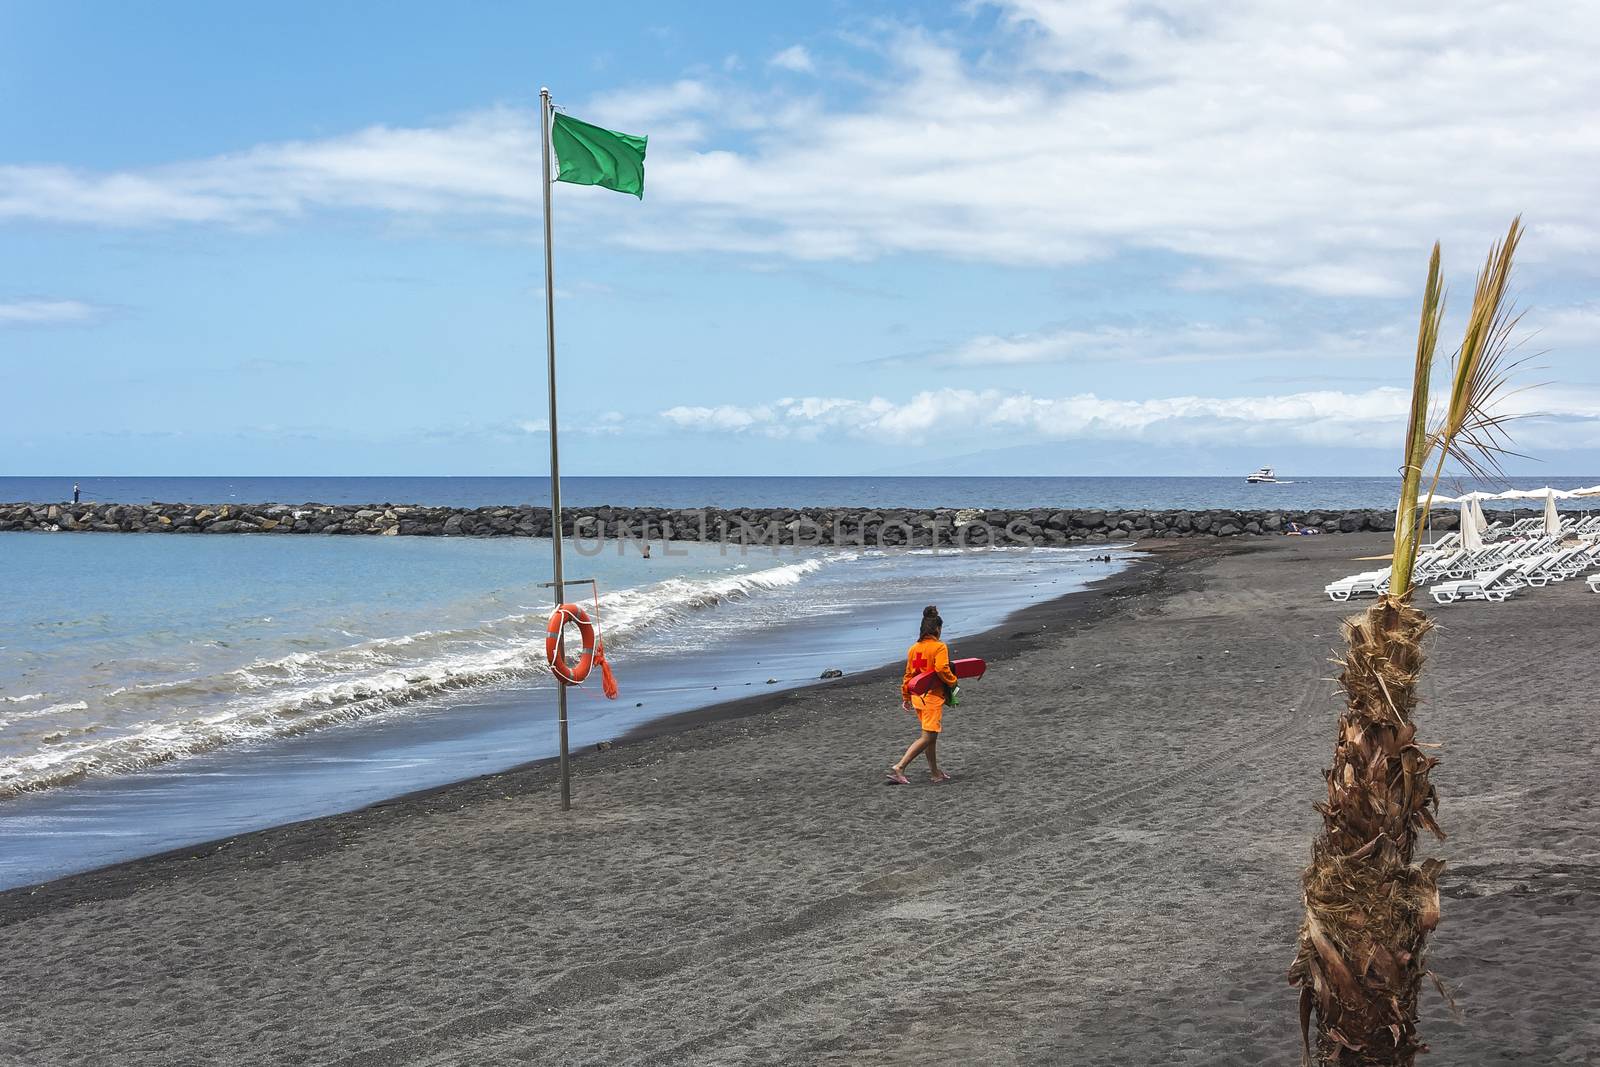 Green flag raised above the beach (Spain, Tenerife island) by Grommik